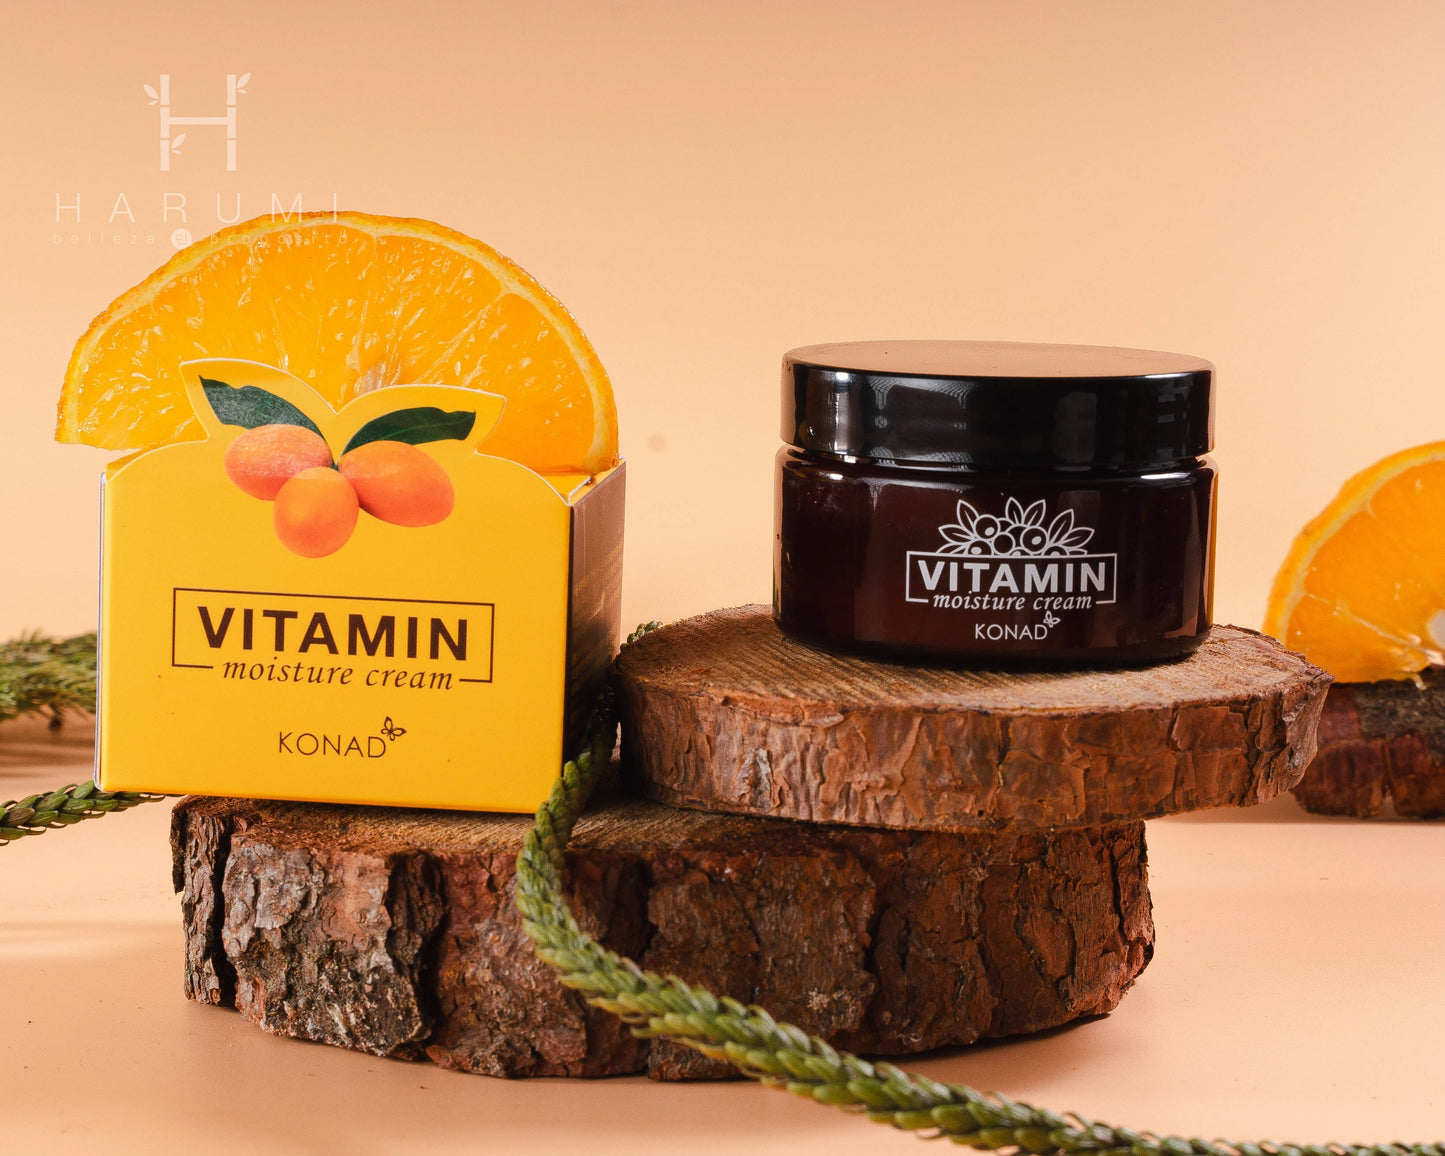 Konad Vitamin Moisture Cream Skincare maquillaje productos de belleza coreanos en Colombia kbeauty